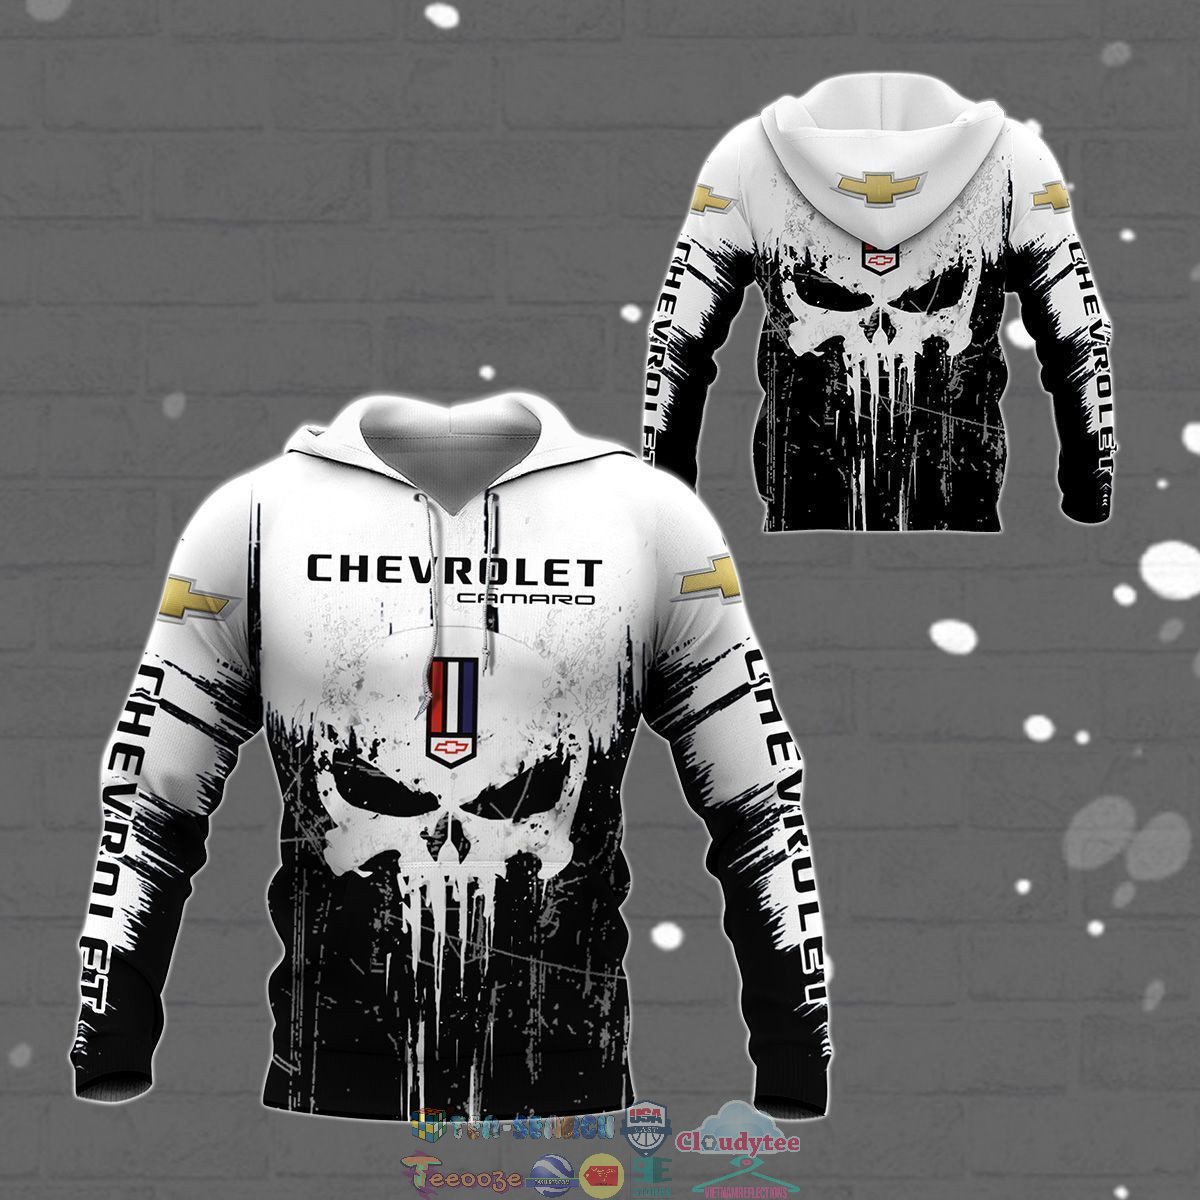 Chevrolet Camaro Skull ver 1 3D hoodie and t-shirt